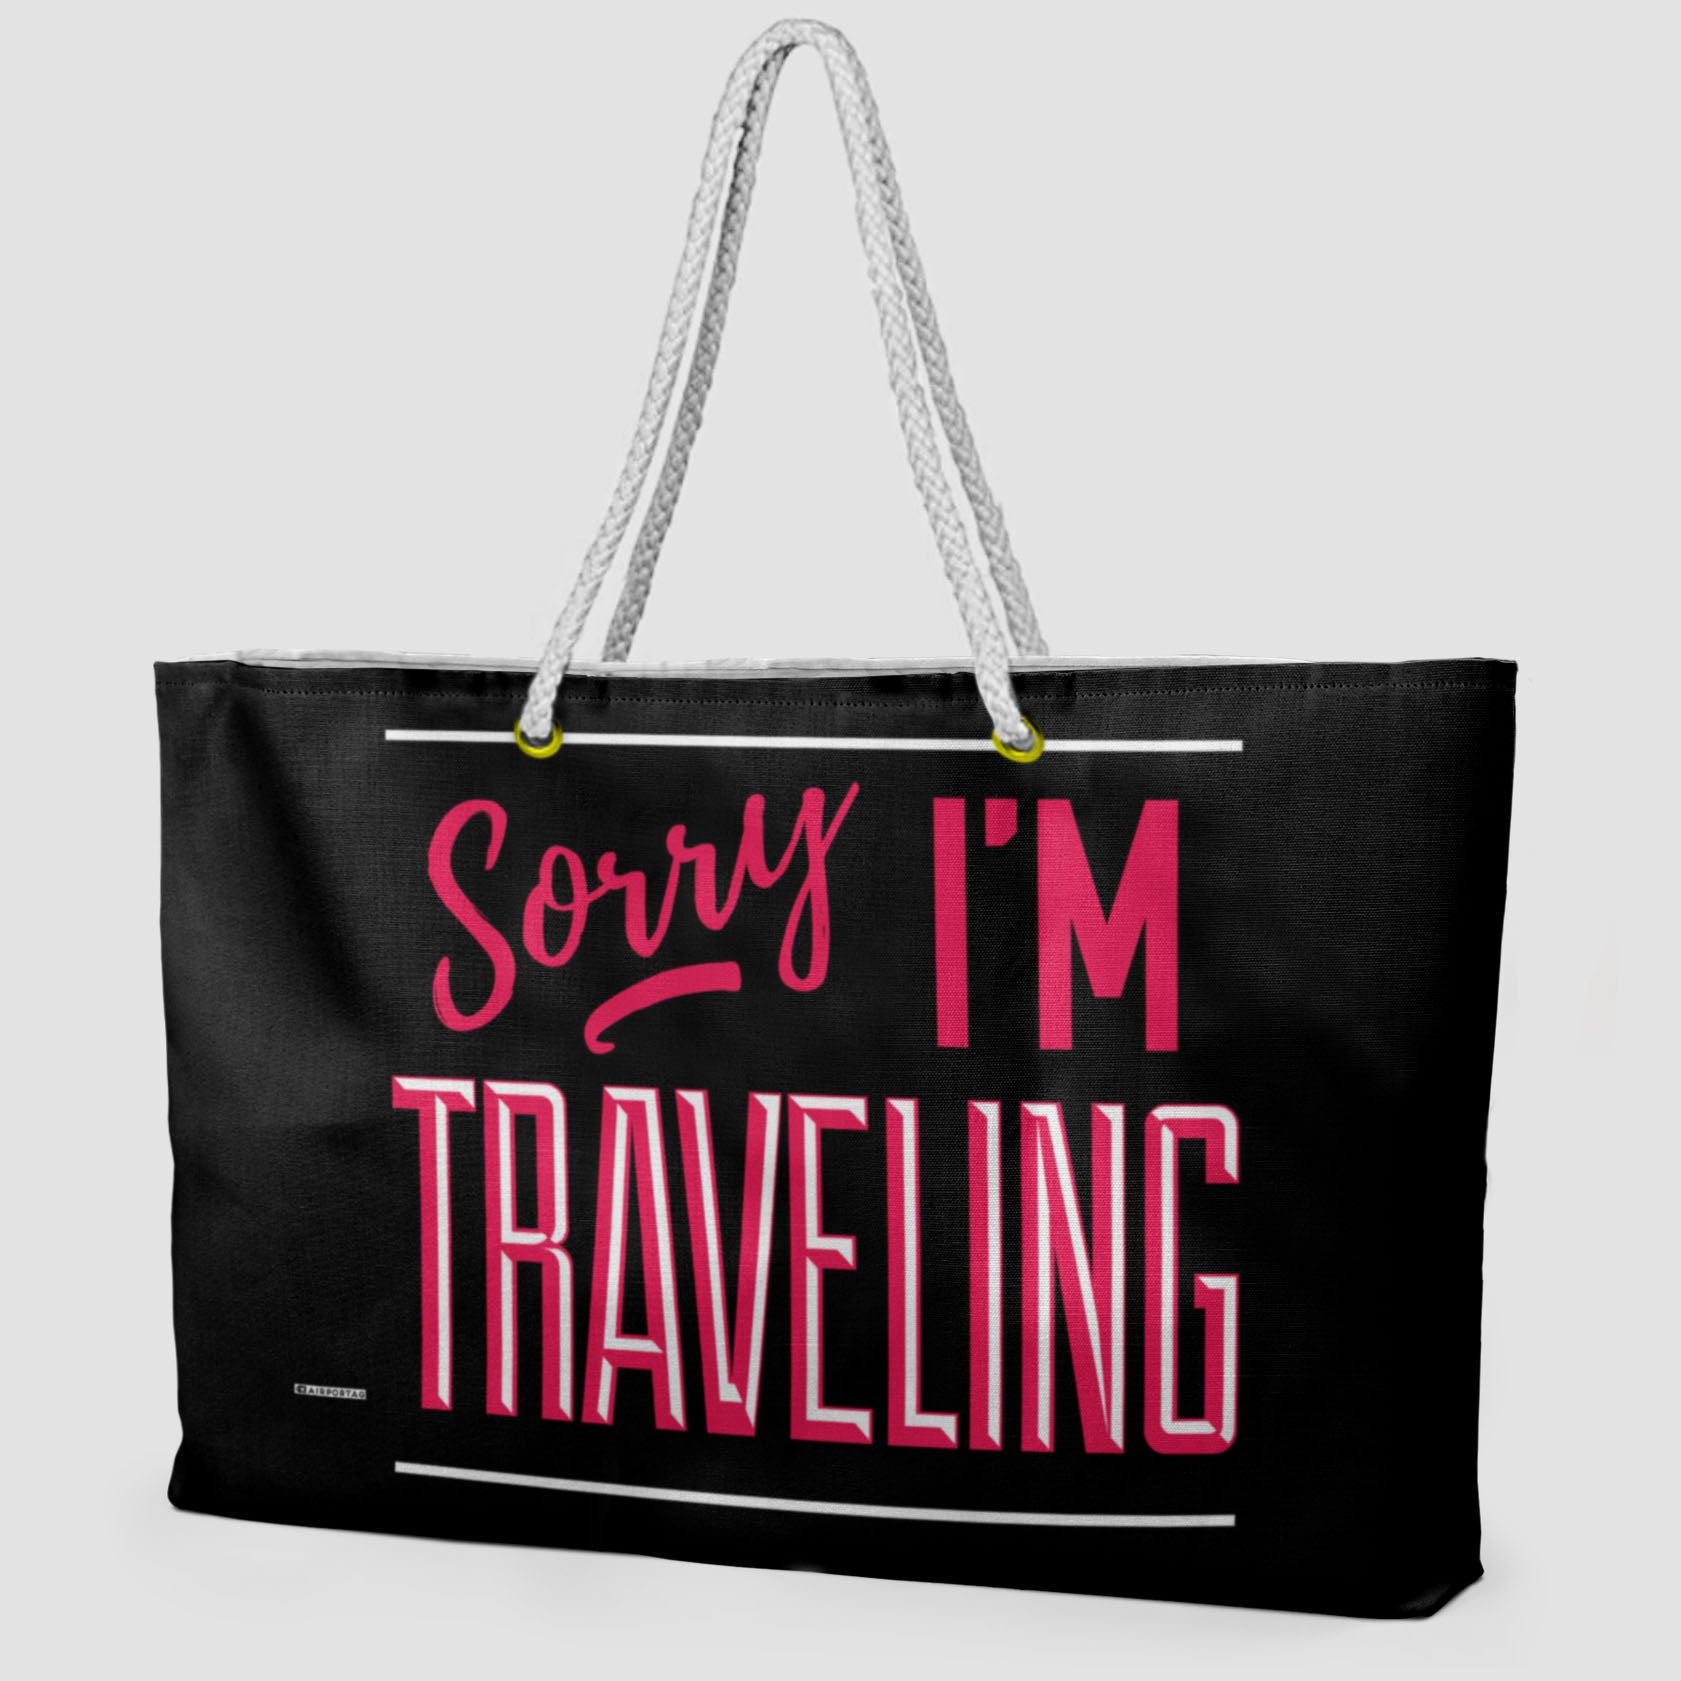 Sorry, I'm traveling - Weekender Bag - Airportag